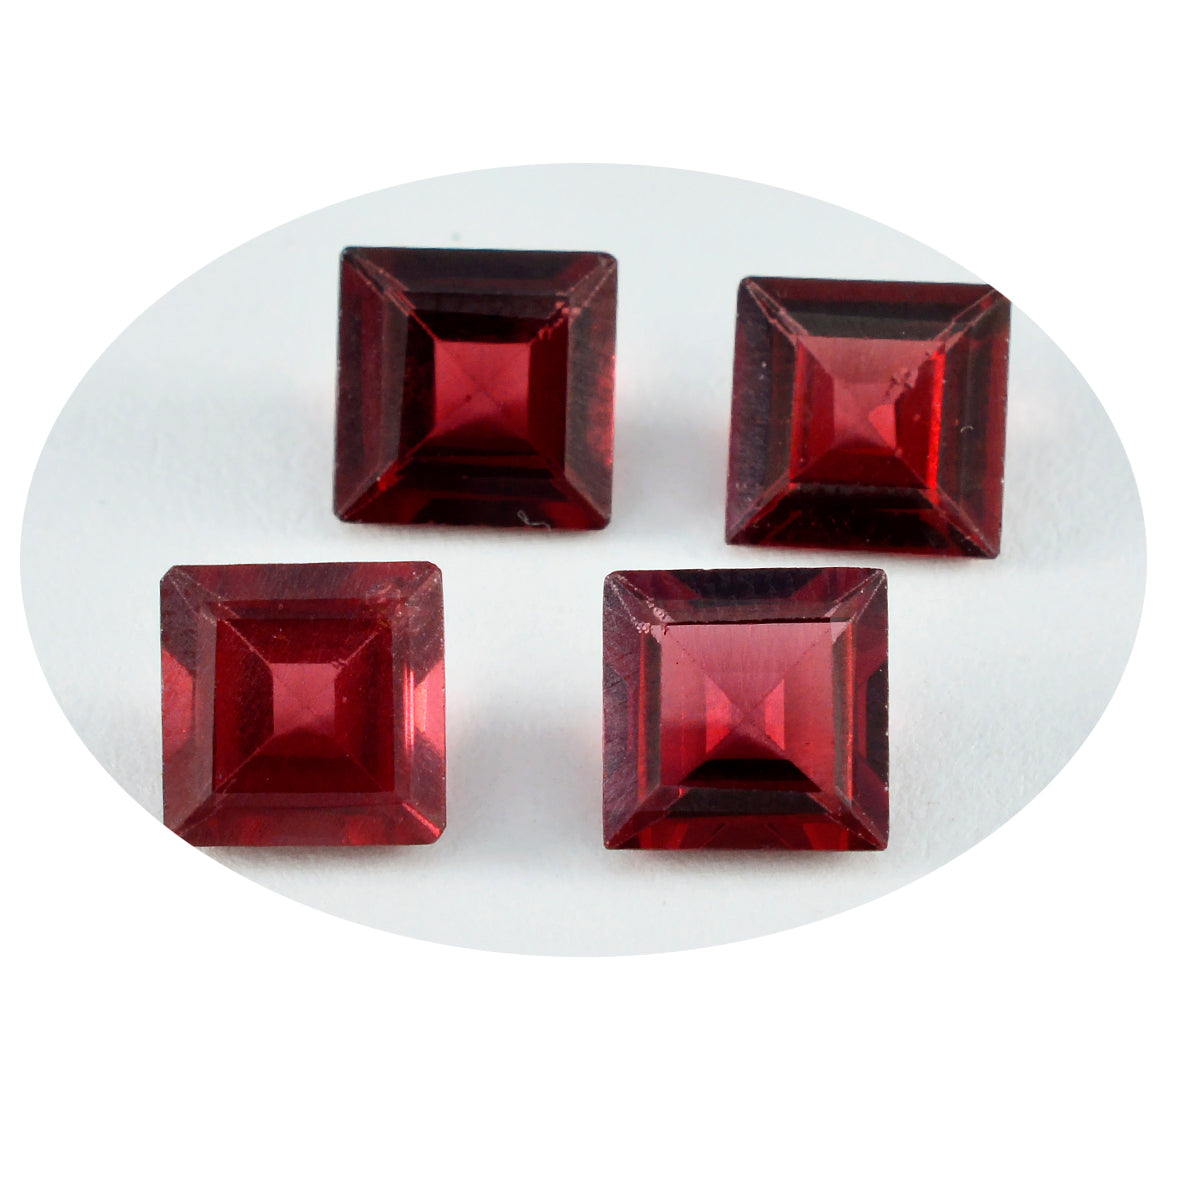 Riyogems 1PC Real Red Garnet Faceted 8x8 mm Square Shape pretty Quality Gemstone